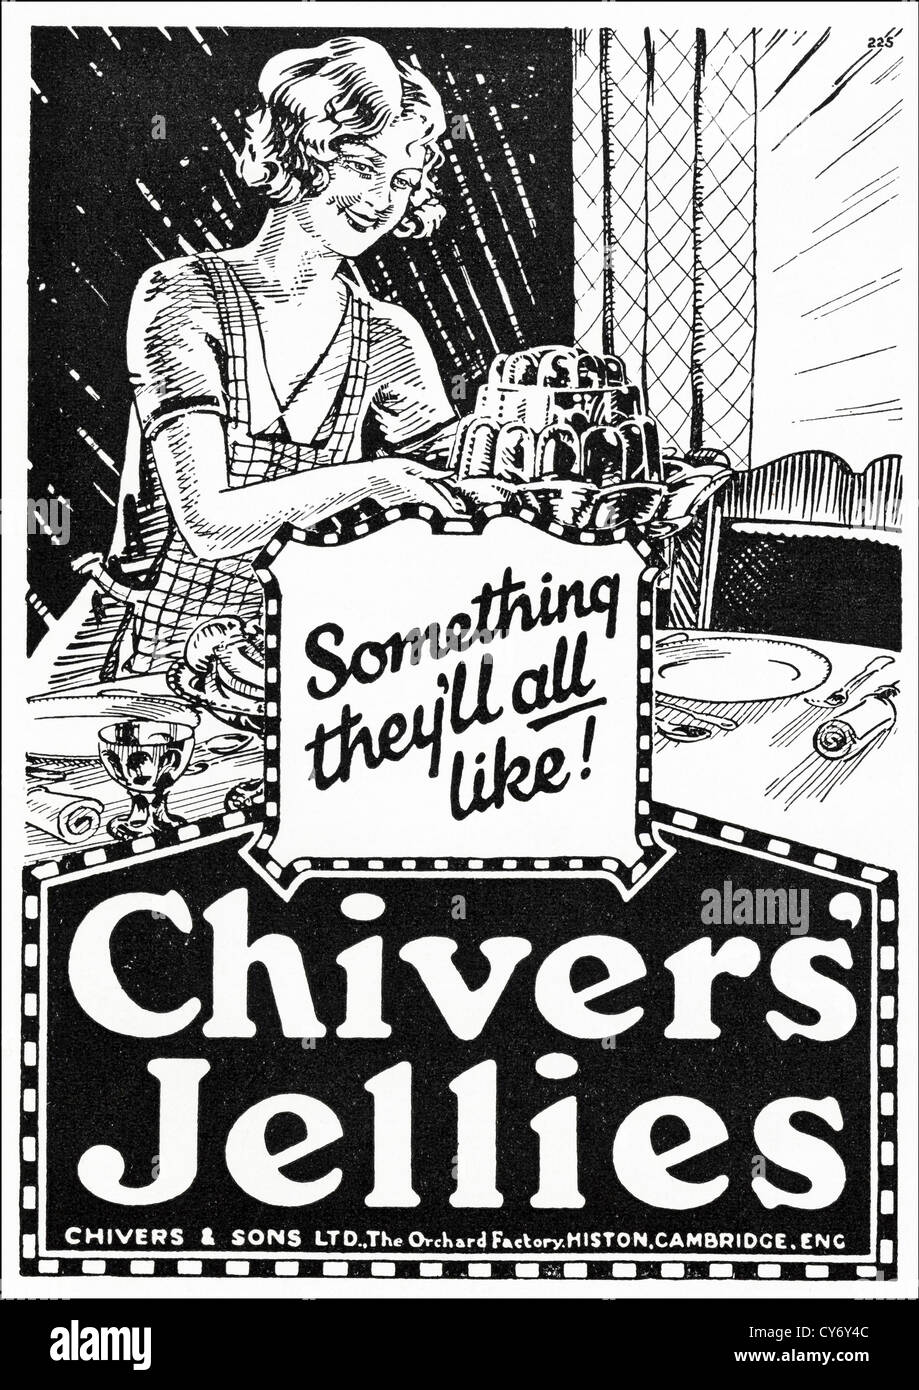 Original 1930s vintage print advertisement from English consumer magazine advertising Chivers Jellies Stock Photo